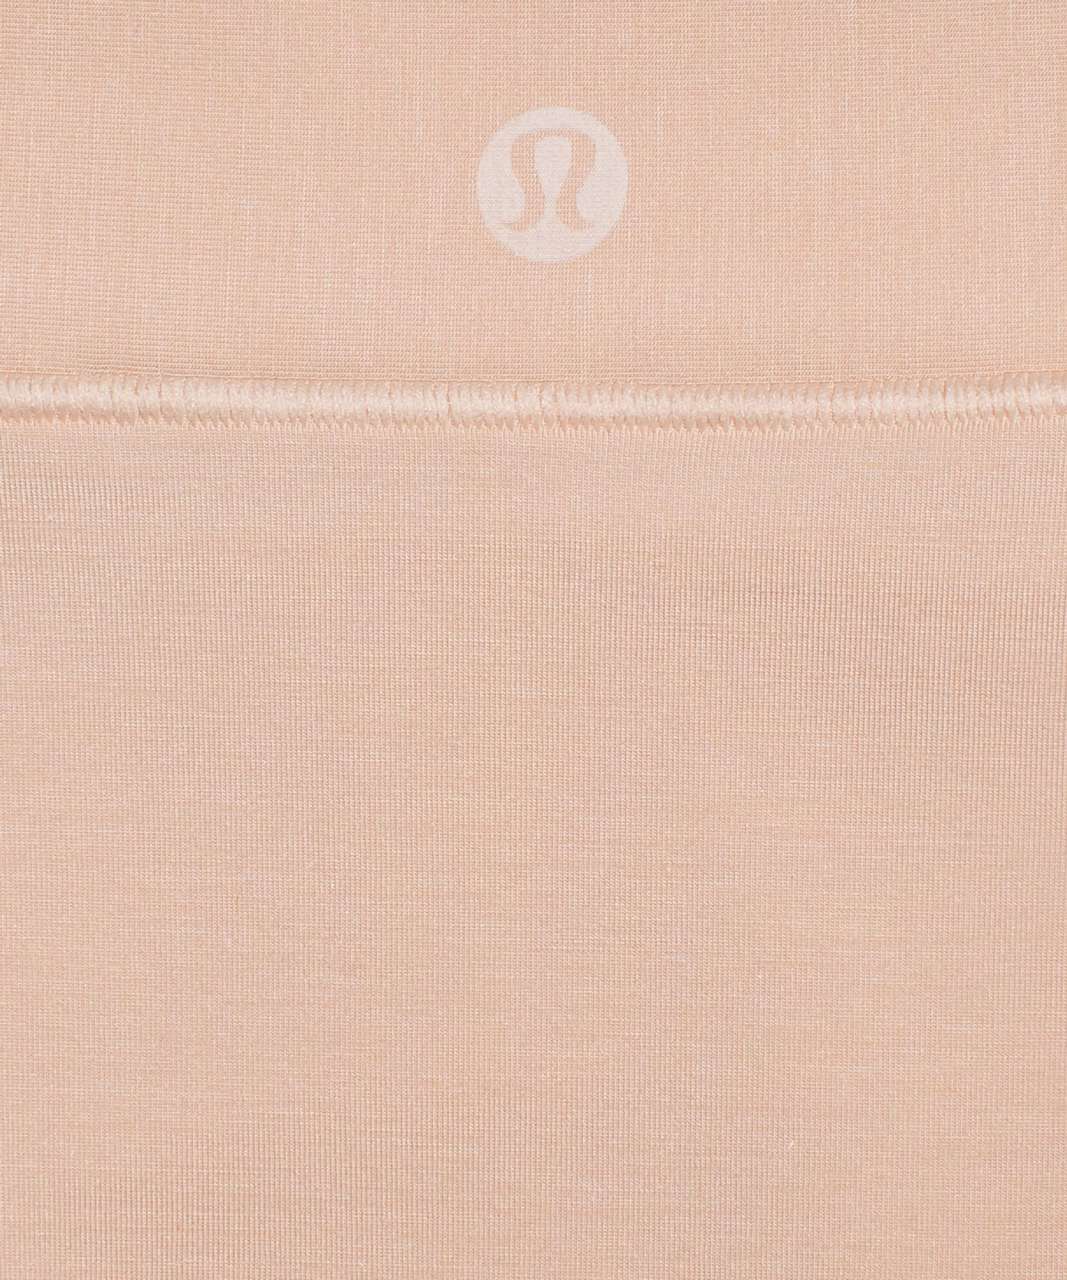 Lululemon UnderEase Mid-Rise Bikini Underwear *5 Pack - French Press / Twilight Rose / Misty Shell / Pale Linen / Contour